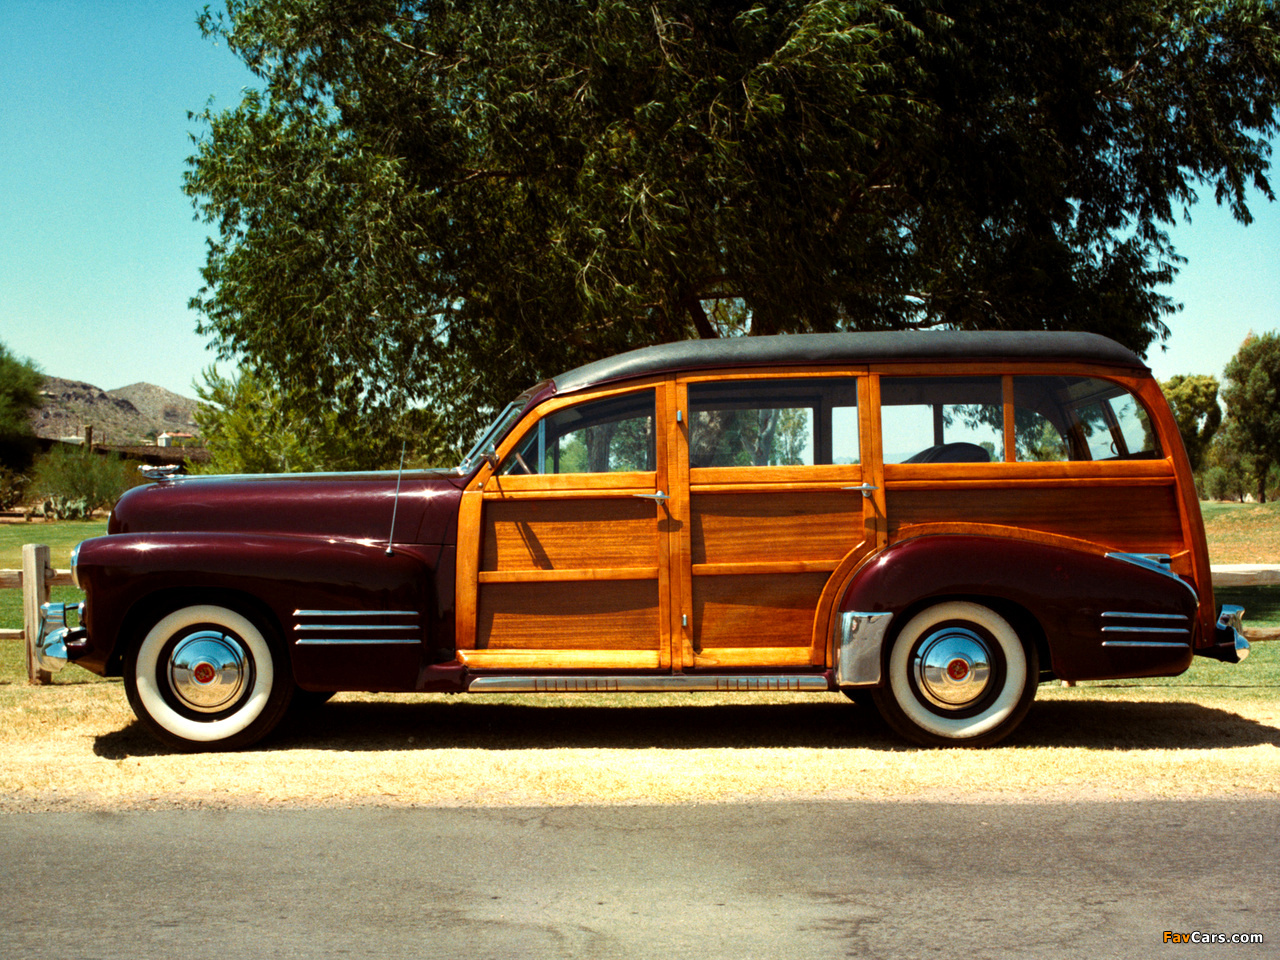 Cadillac Sixty-One Station Wagon by Freds Builder 1941 photos (1280x960) .